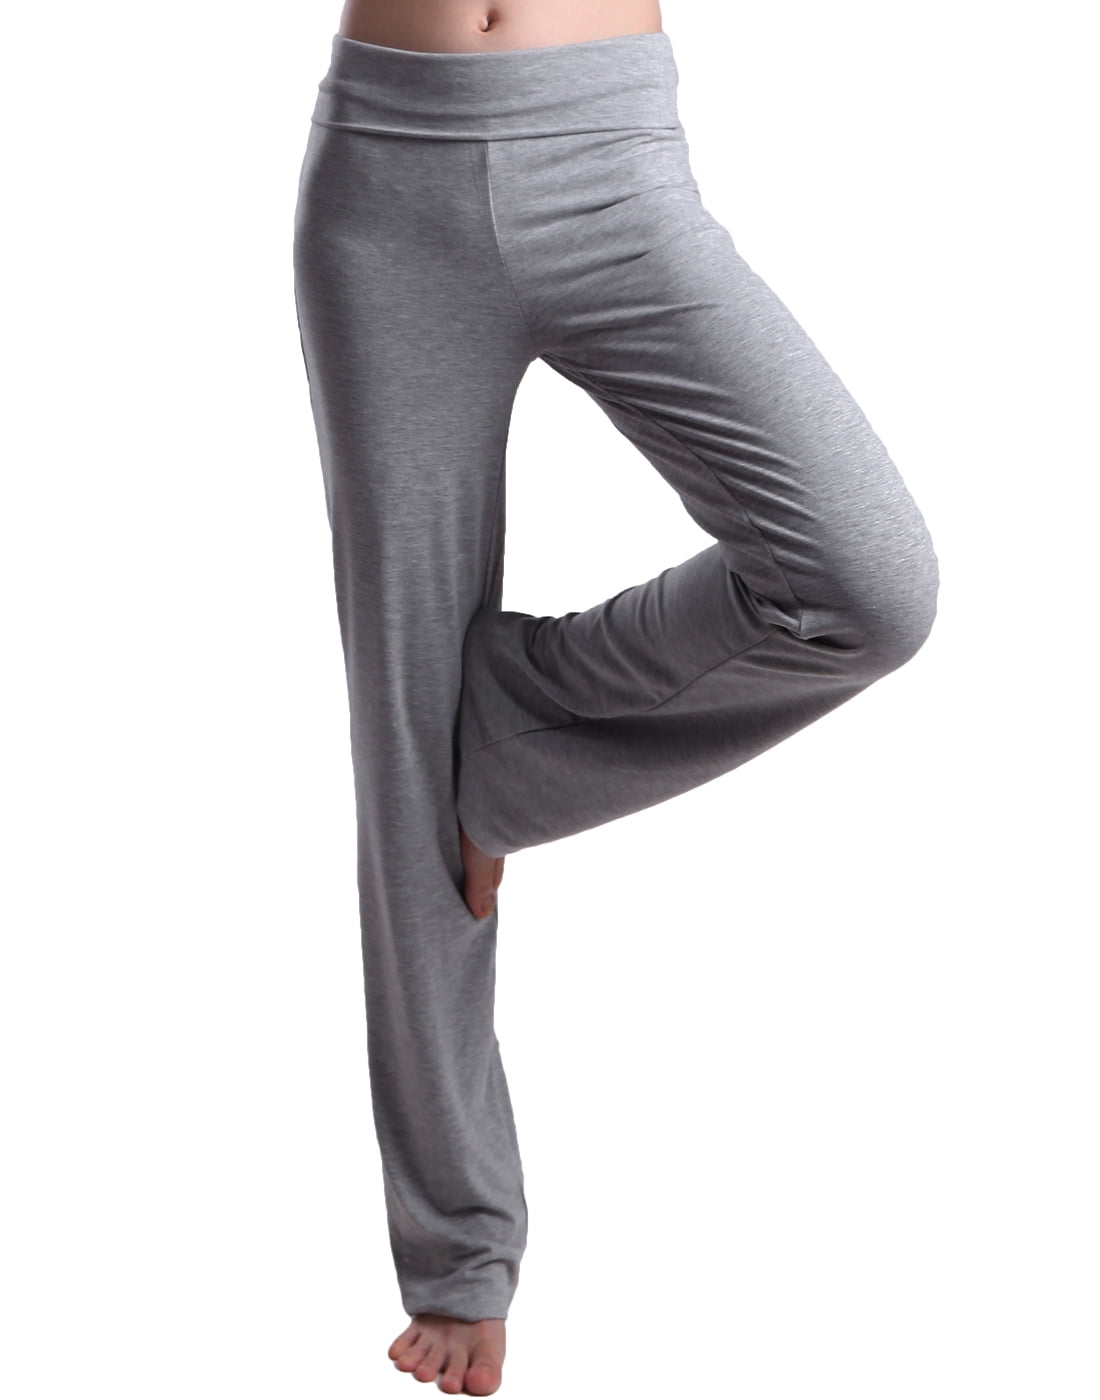 HDE Foldover Athletic Yoga Pants Gym Workout Leggings (Light Gray